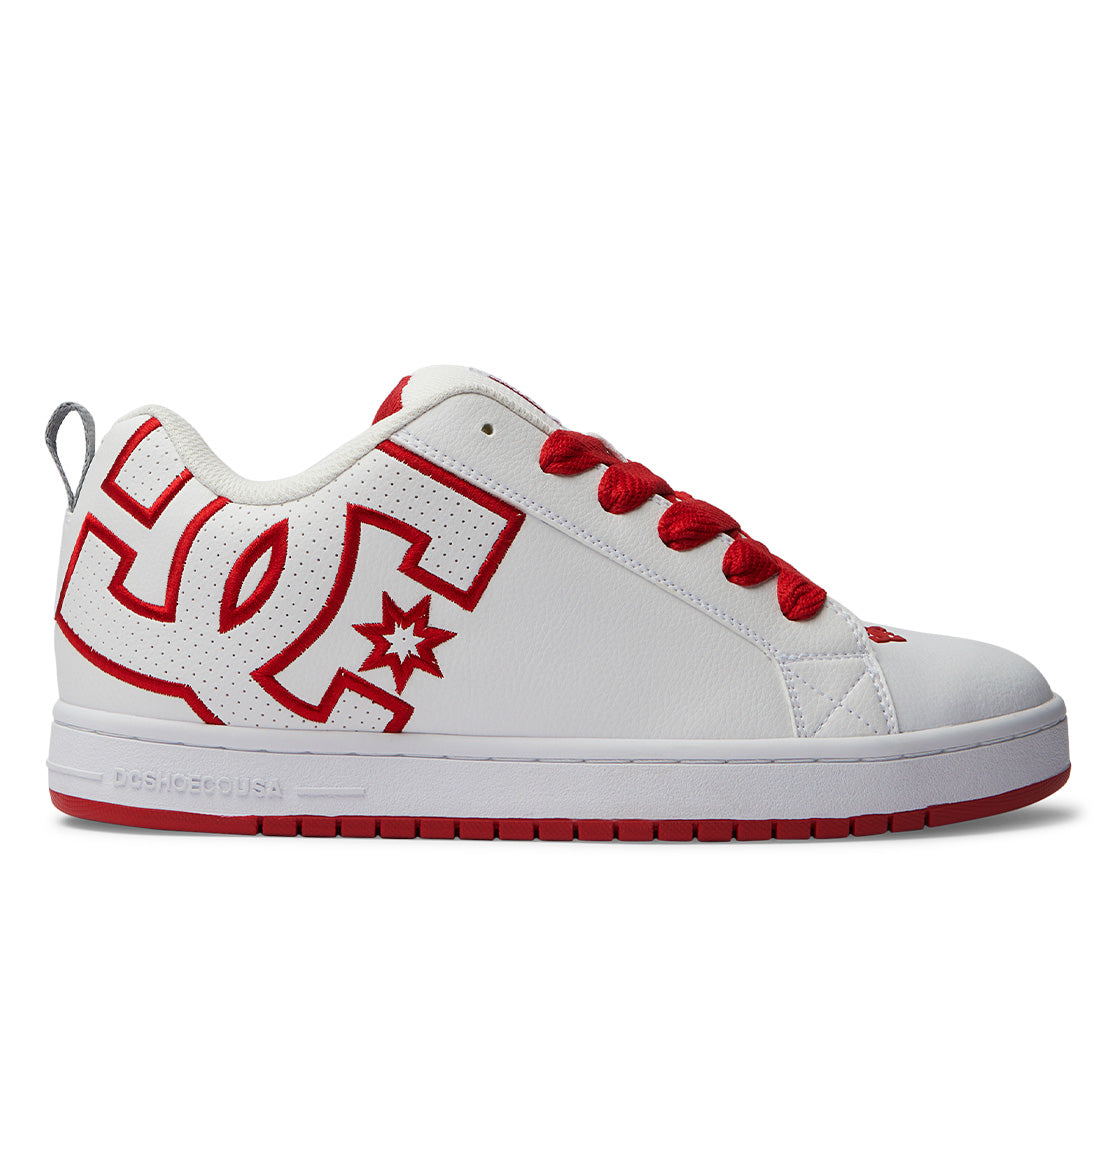 Men's Court Graffik Shoes - White/Red/Grey